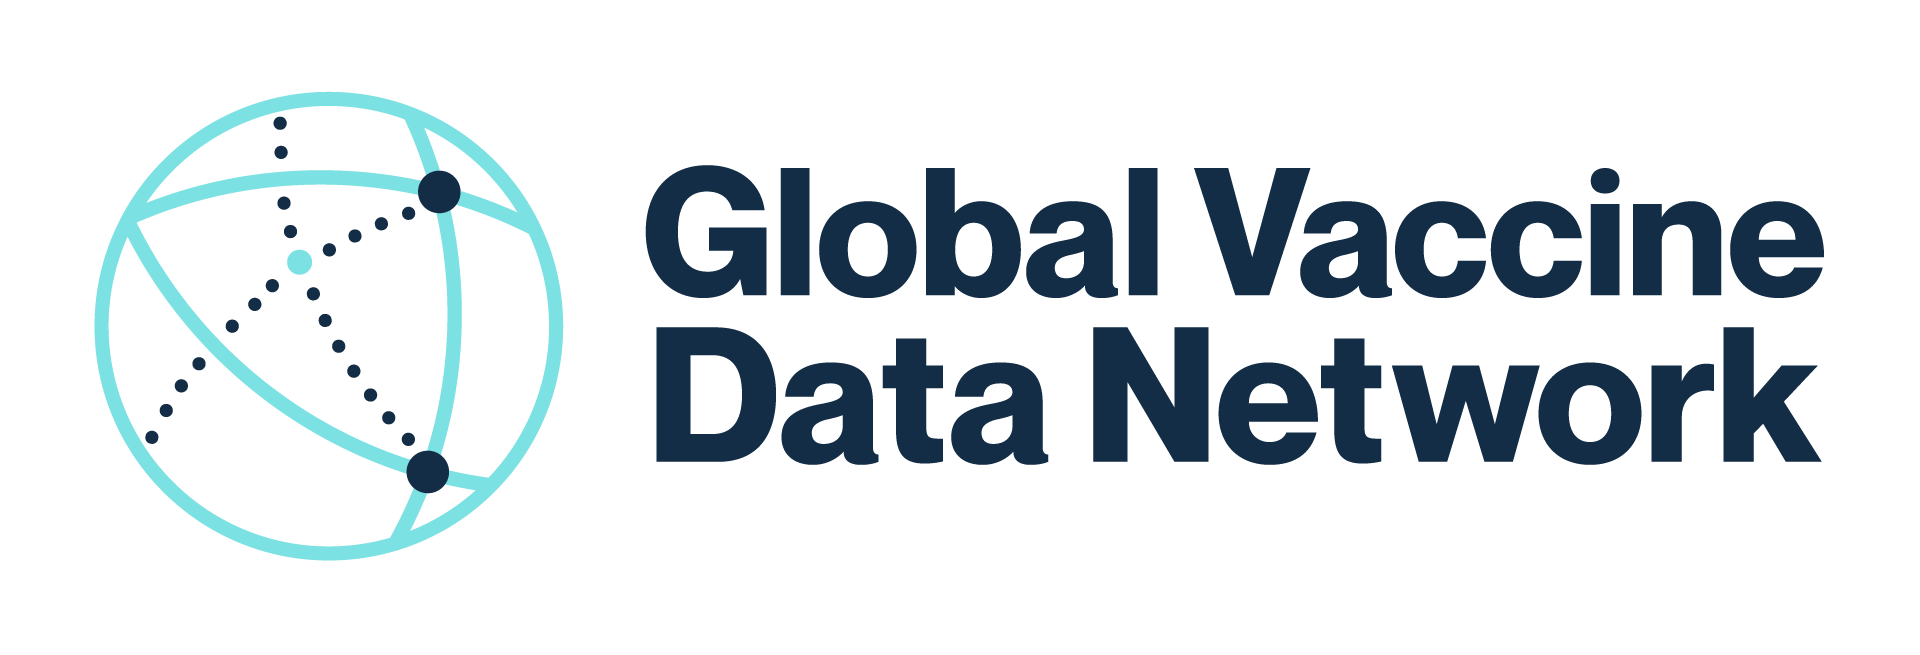 Global Vaccine Data Network Logo